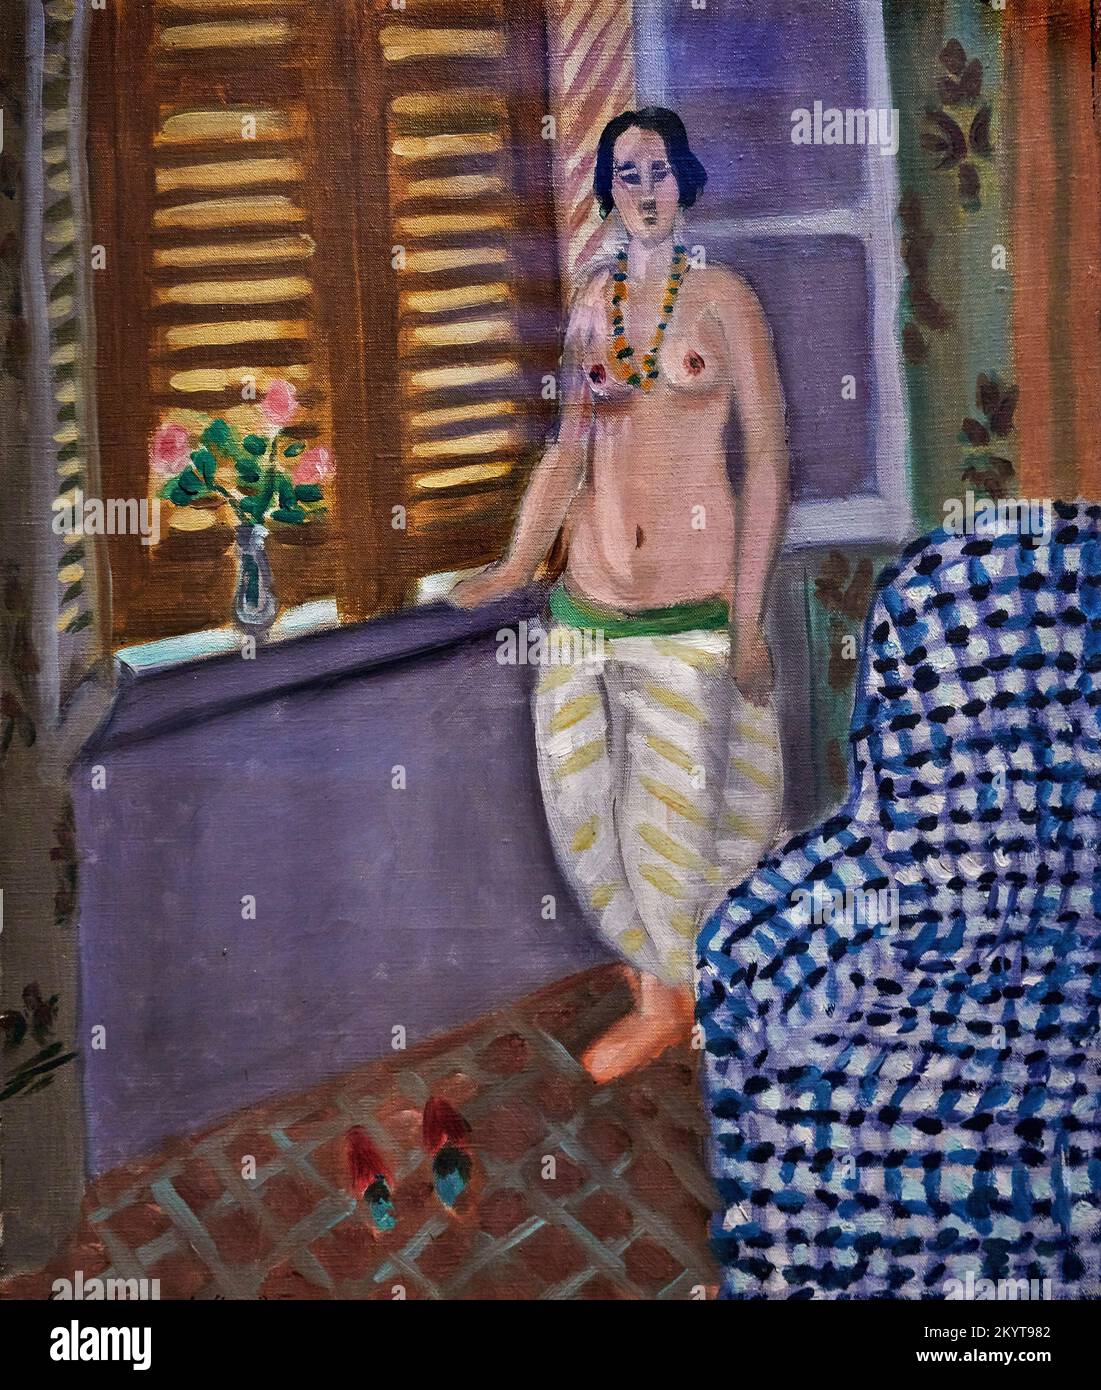 Odalisca - olio su tela - Henry Matisse - 1925 - Milano, Museo del Novecento Foto Stock